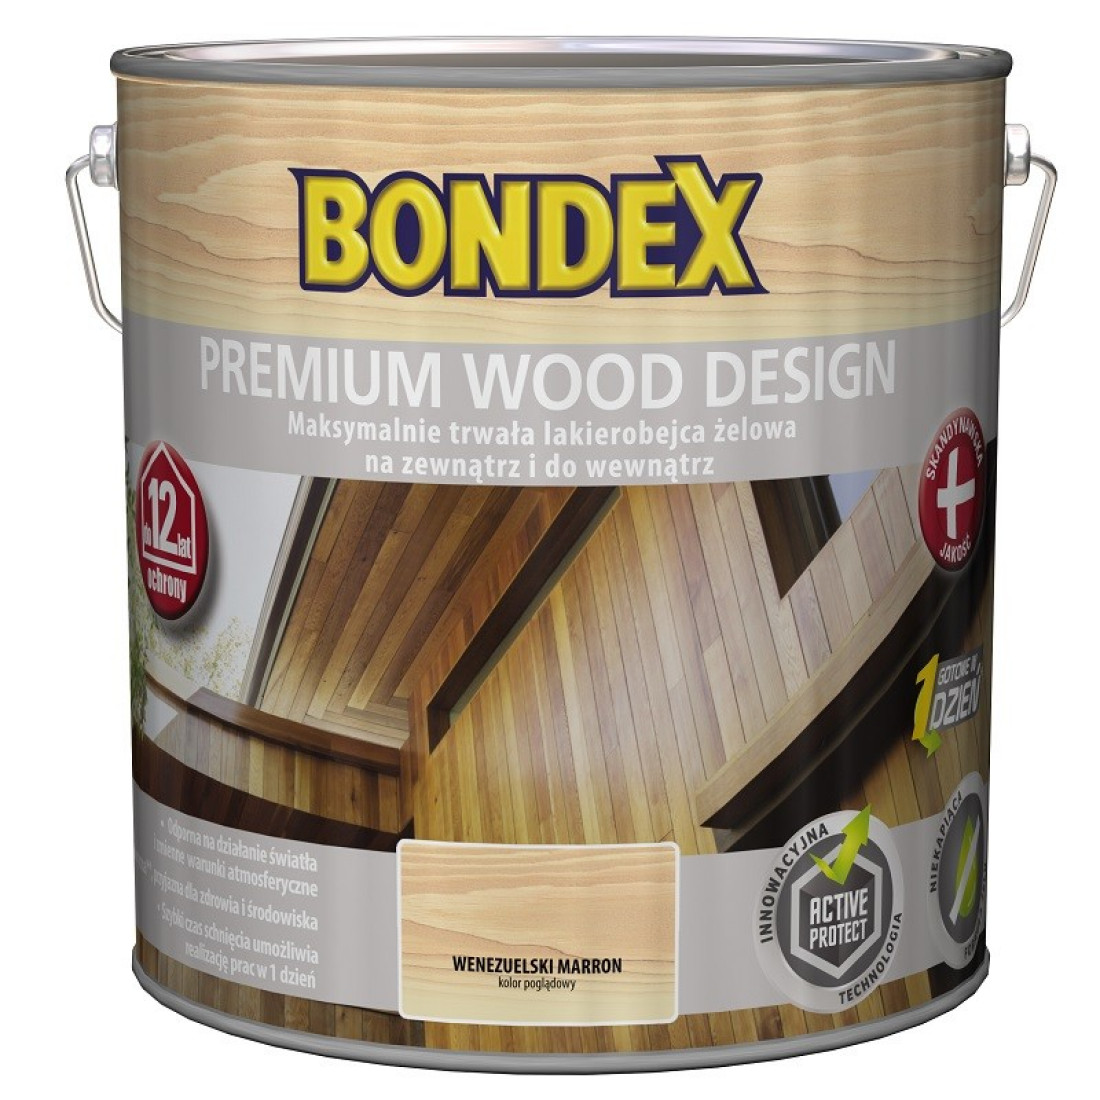 Nowa lakierobejca żelowa Bondex - Premium Wood Design 